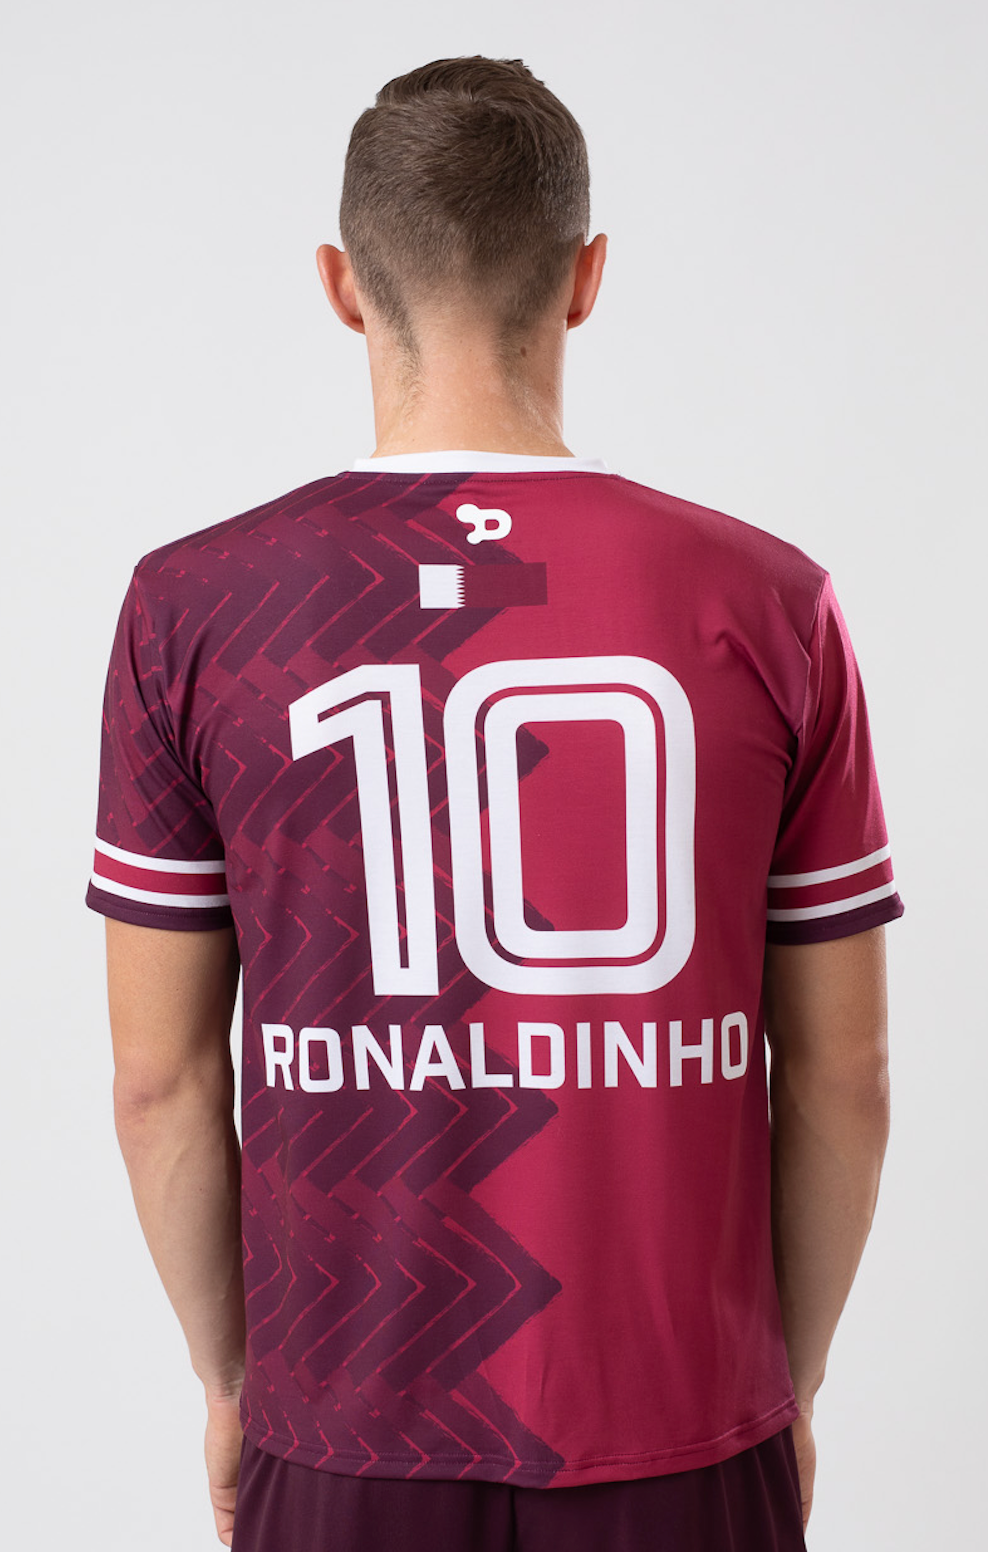 Ronaldinho Qatar Jersey/Camisa Wholesale